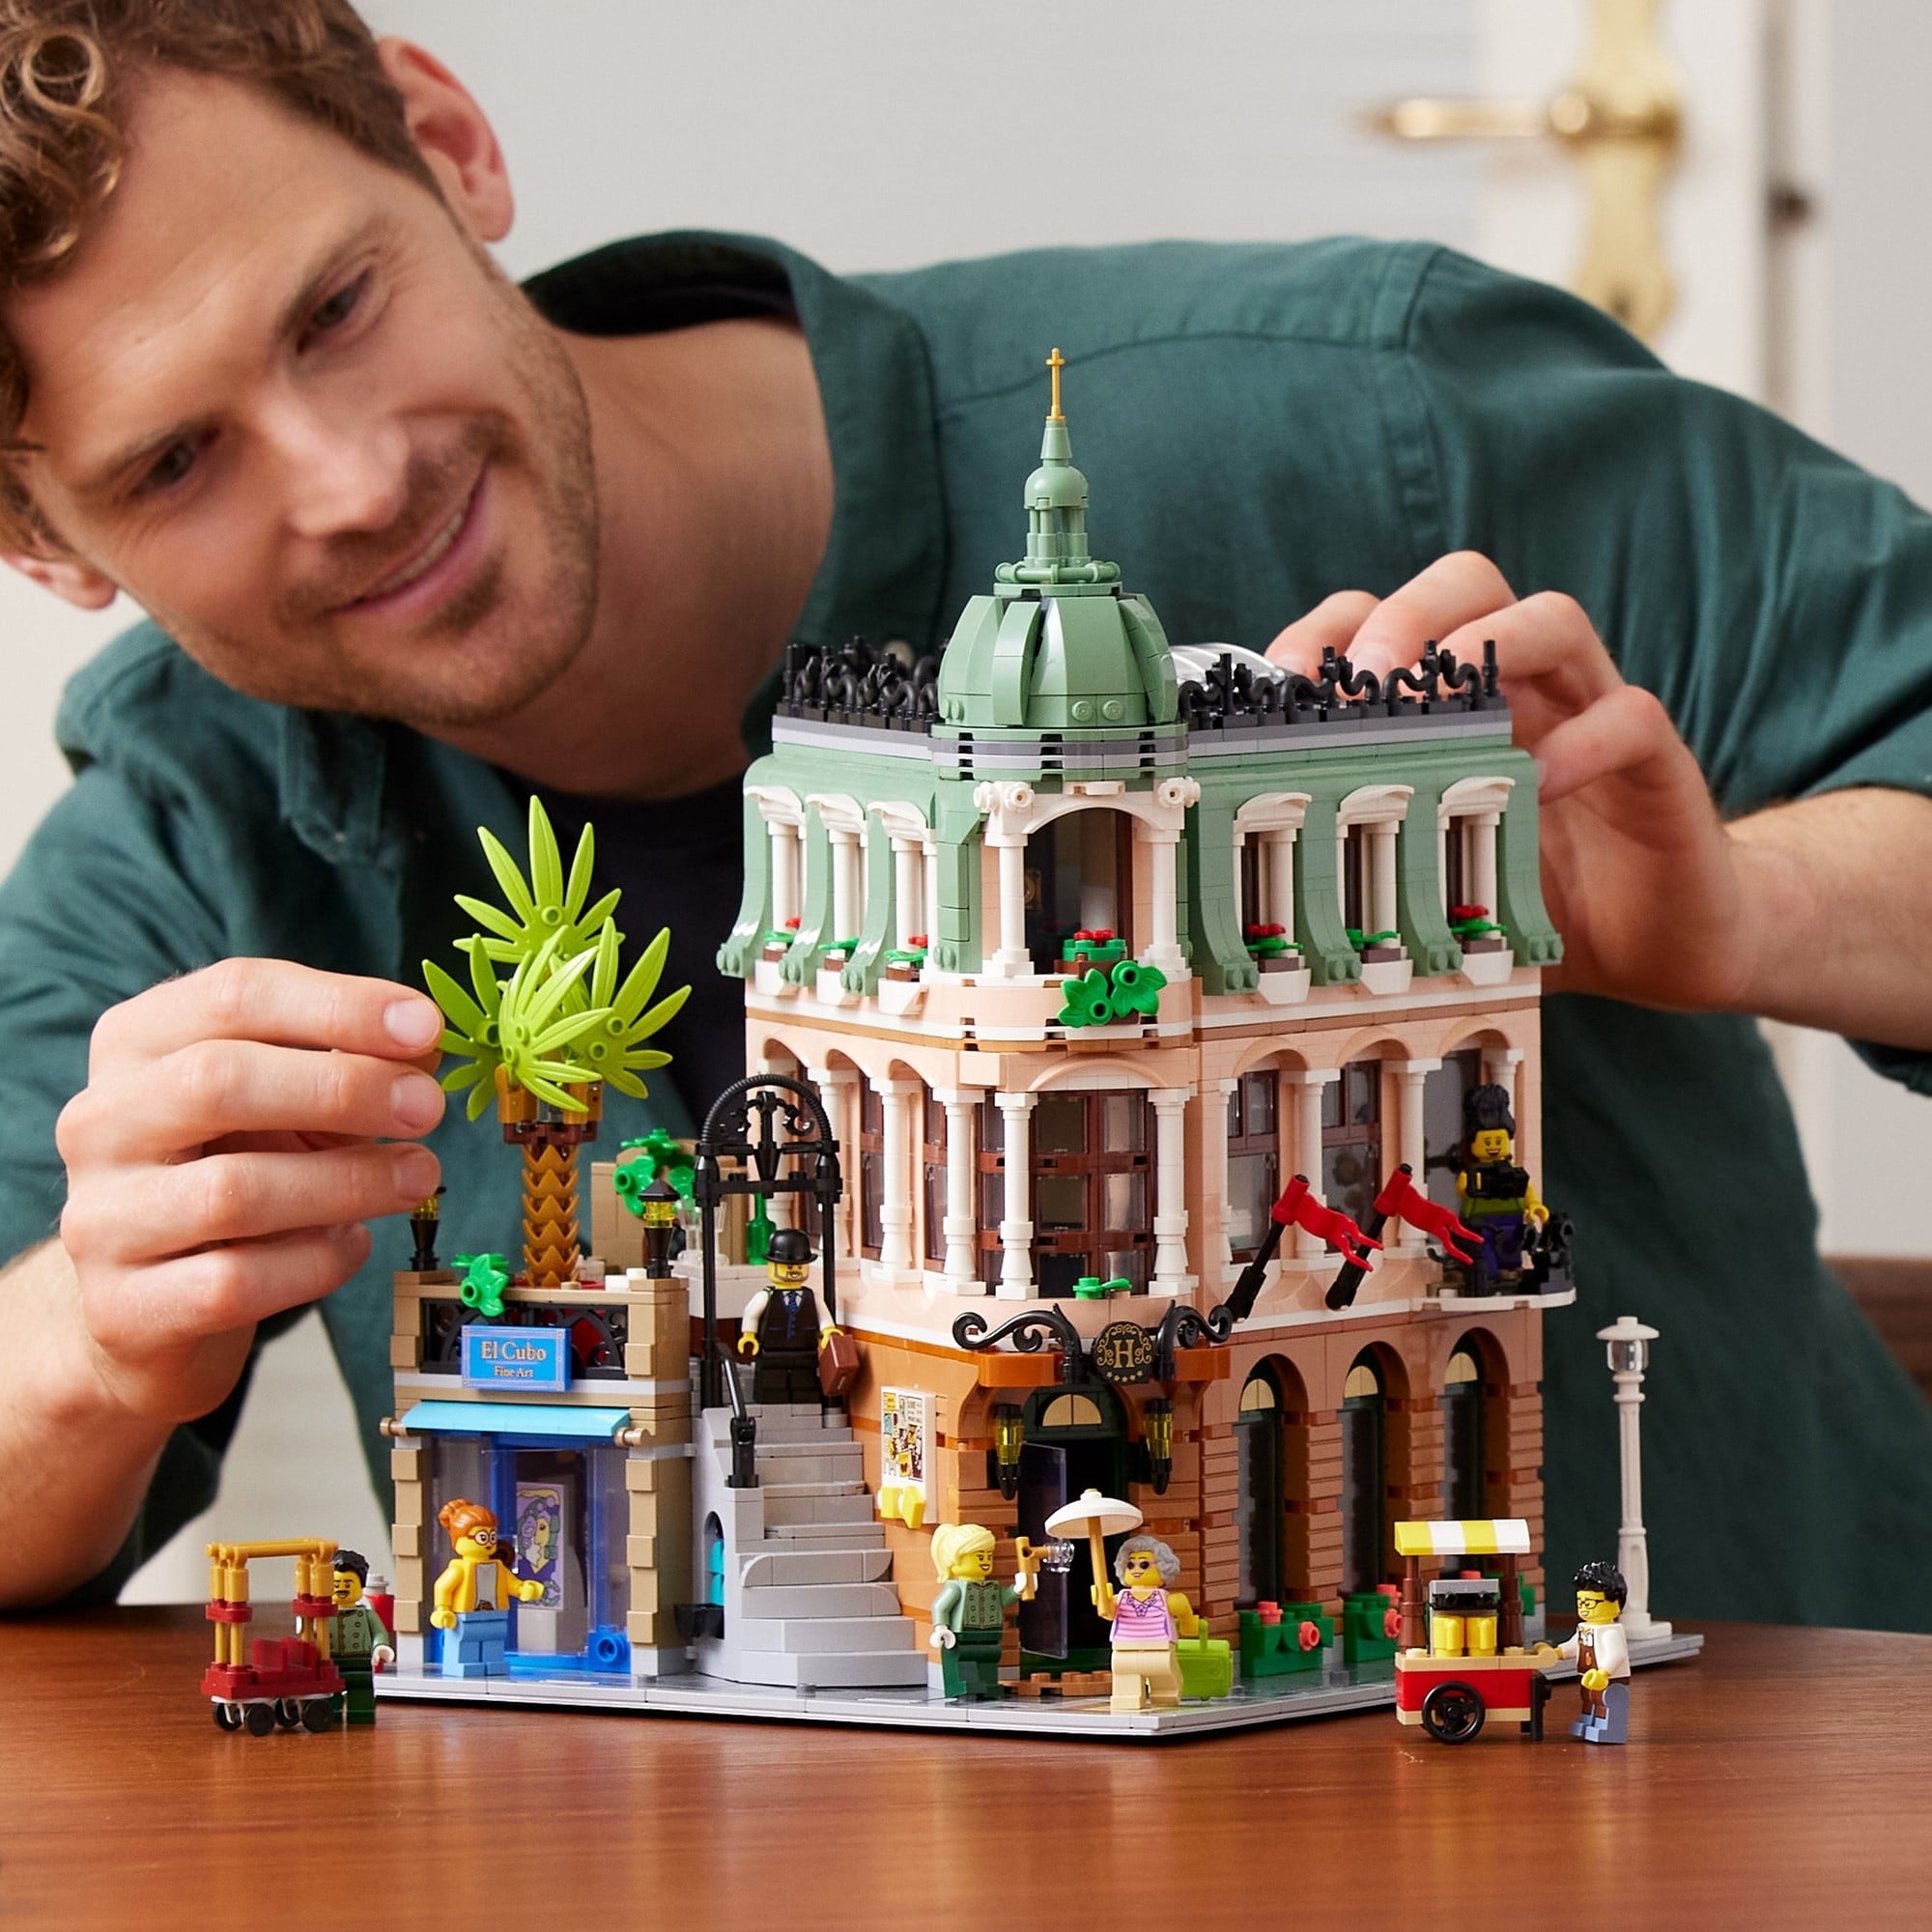 Schandalig Andes kofferbak LEGO Creator Expert 10297 Hotel met kunstgalerie (Modular Building) vanaf 1  januari 2022 te koop · BrickTastic